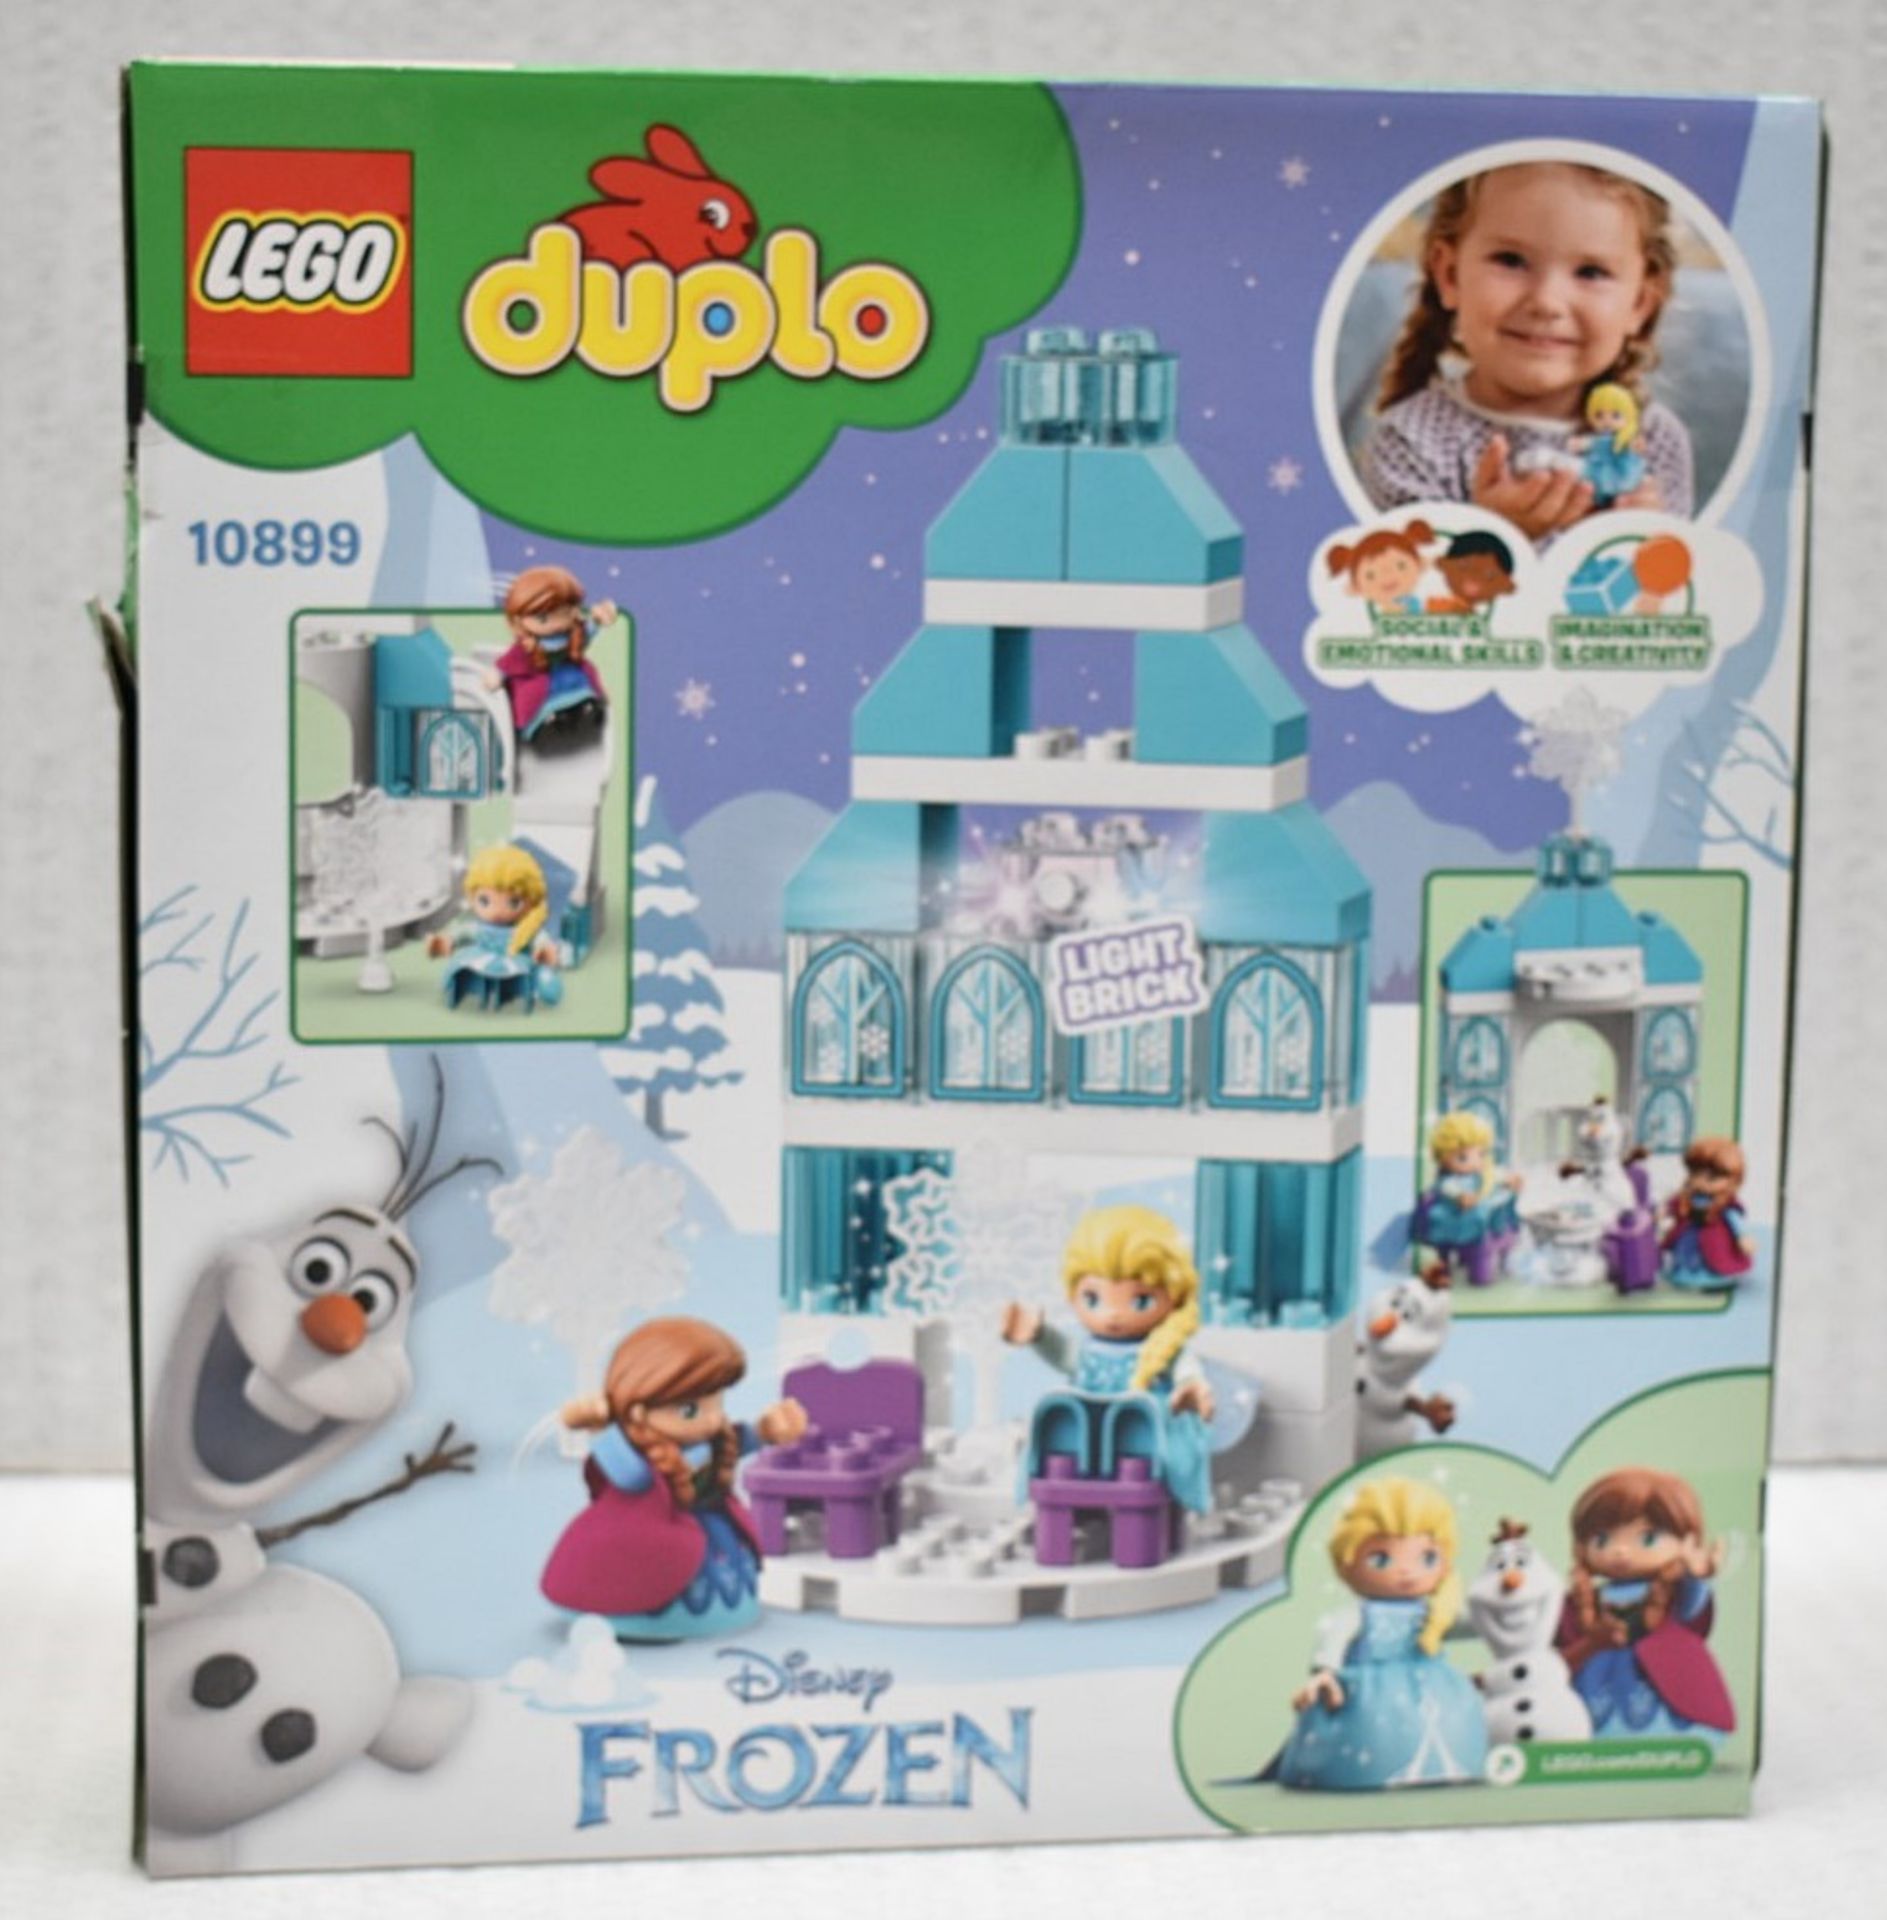 1 x LEGO DUPLO Disney Frozen Ice Castle Set 10899 - Includes 3 Minifigures and Castle Toy Button- - Image 2 of 4